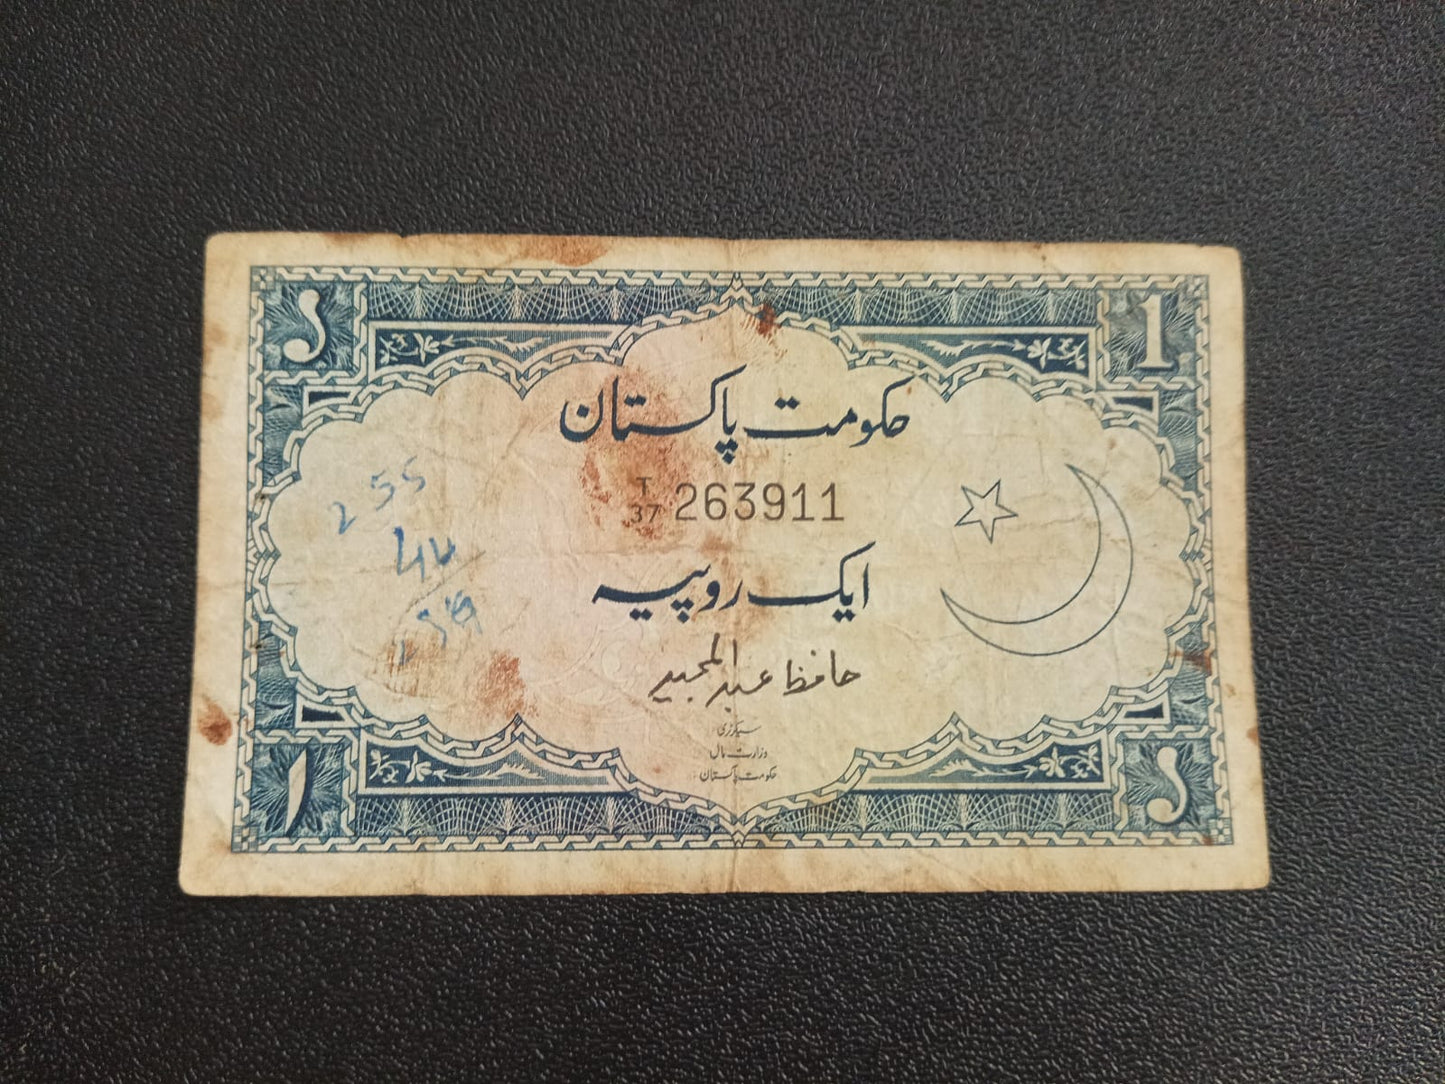 1 Rupee (1953-1961 - signed hafiz abdul majed) Scarce - Pakistan (Ref : 150213N)